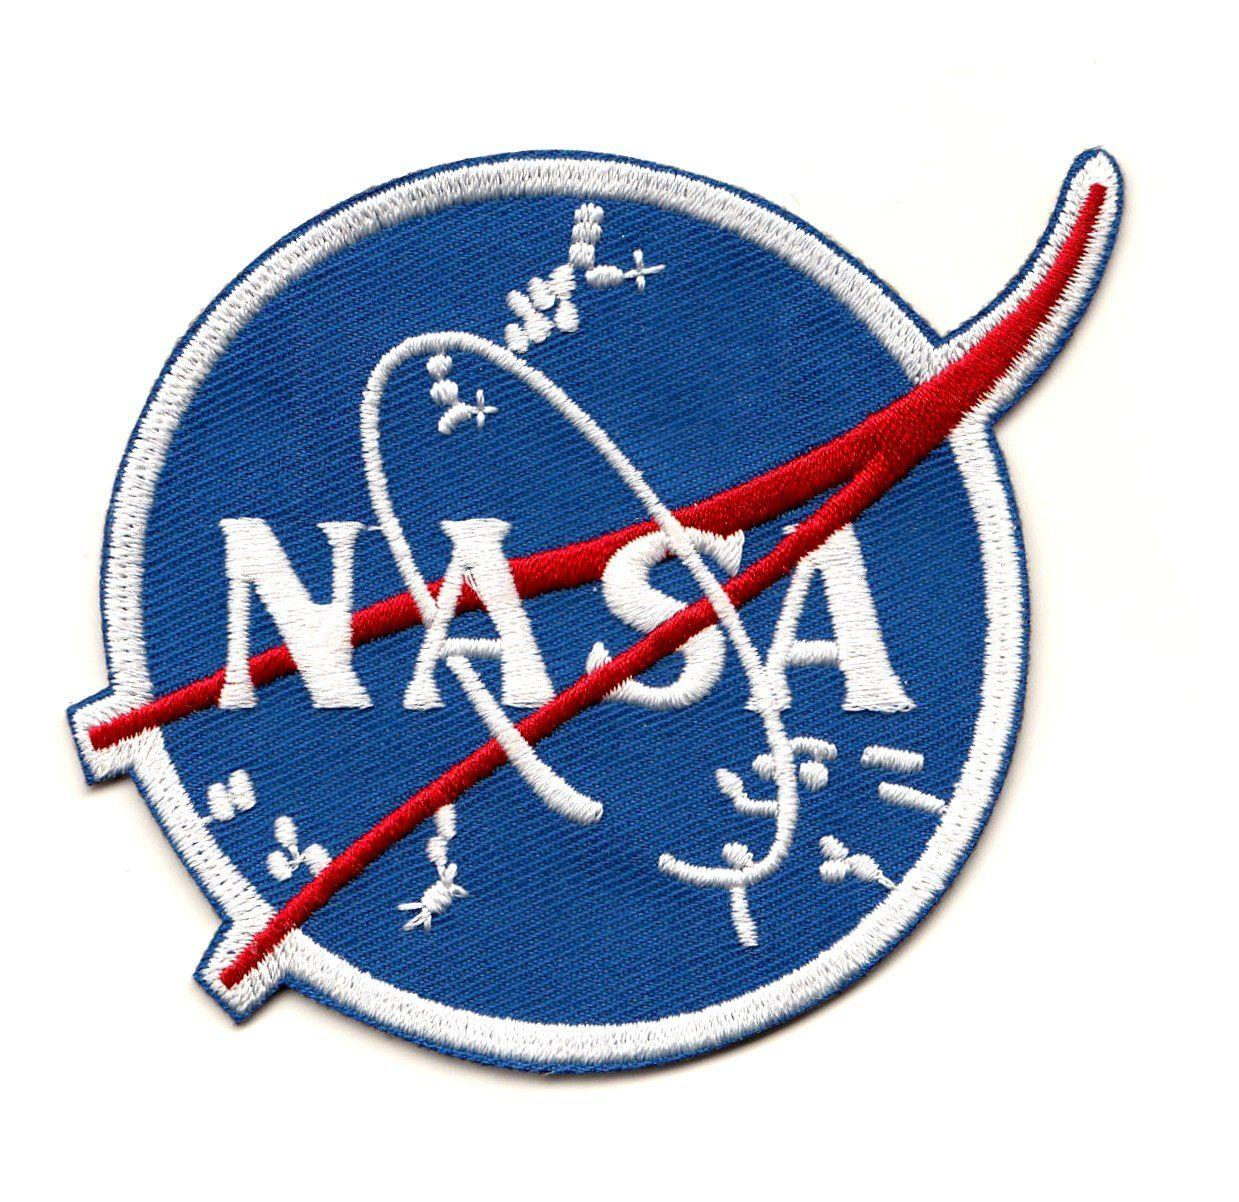 Use of NASA Logo - Use of NASA Logo about space